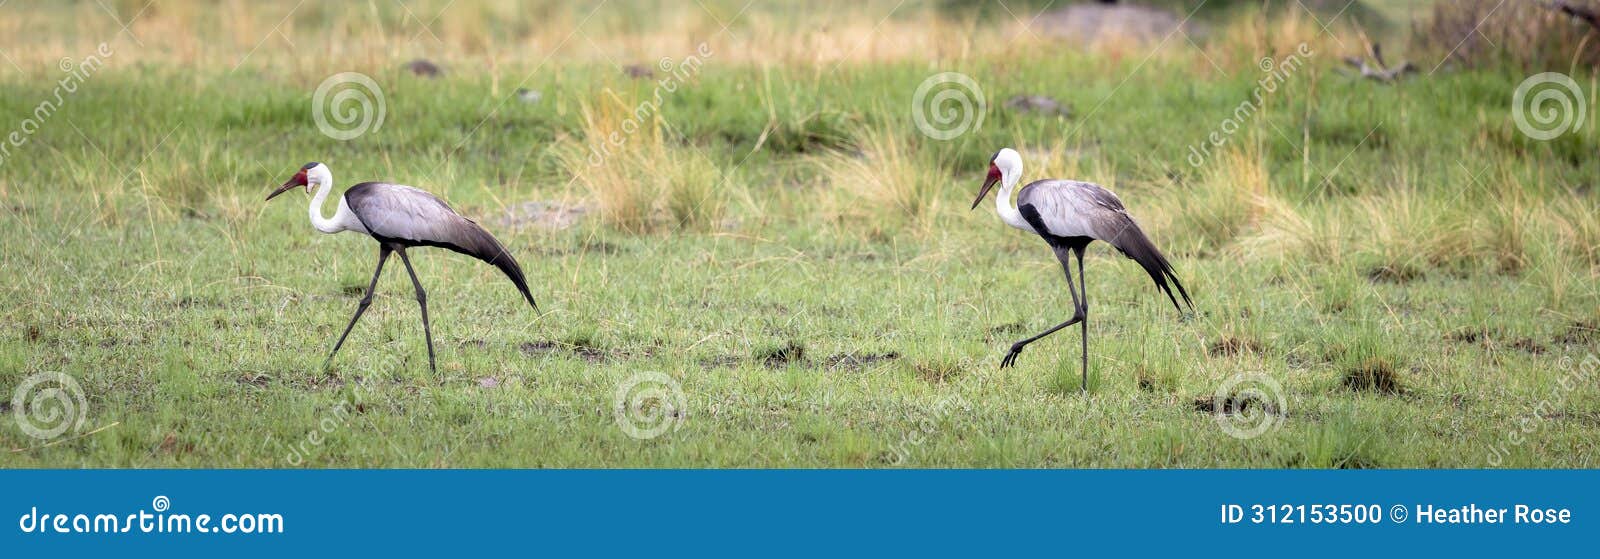 two wattled crane, a threatened species, in botswana, africa